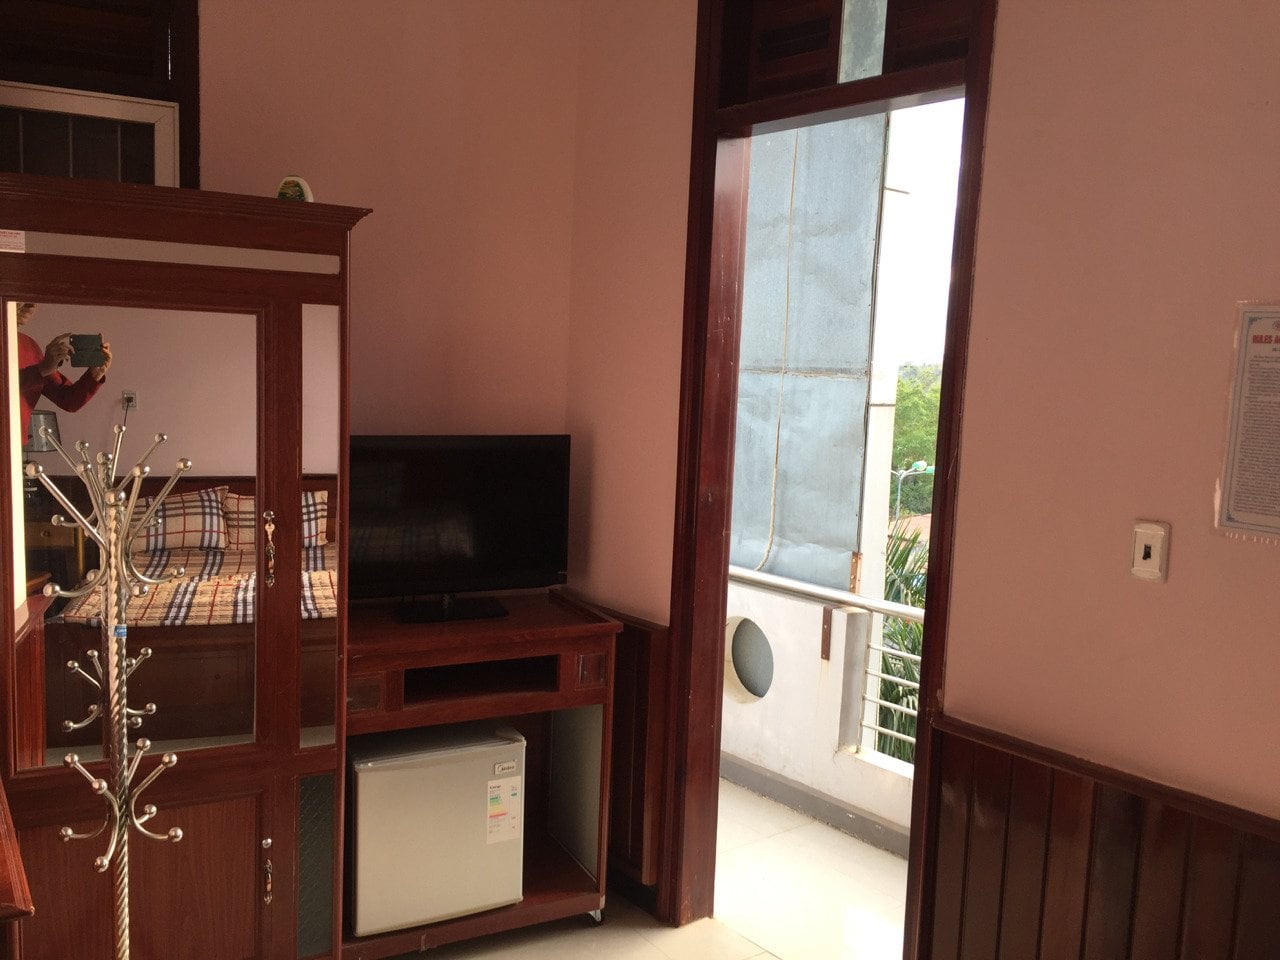 TV, fridge, closet and door to the balcony